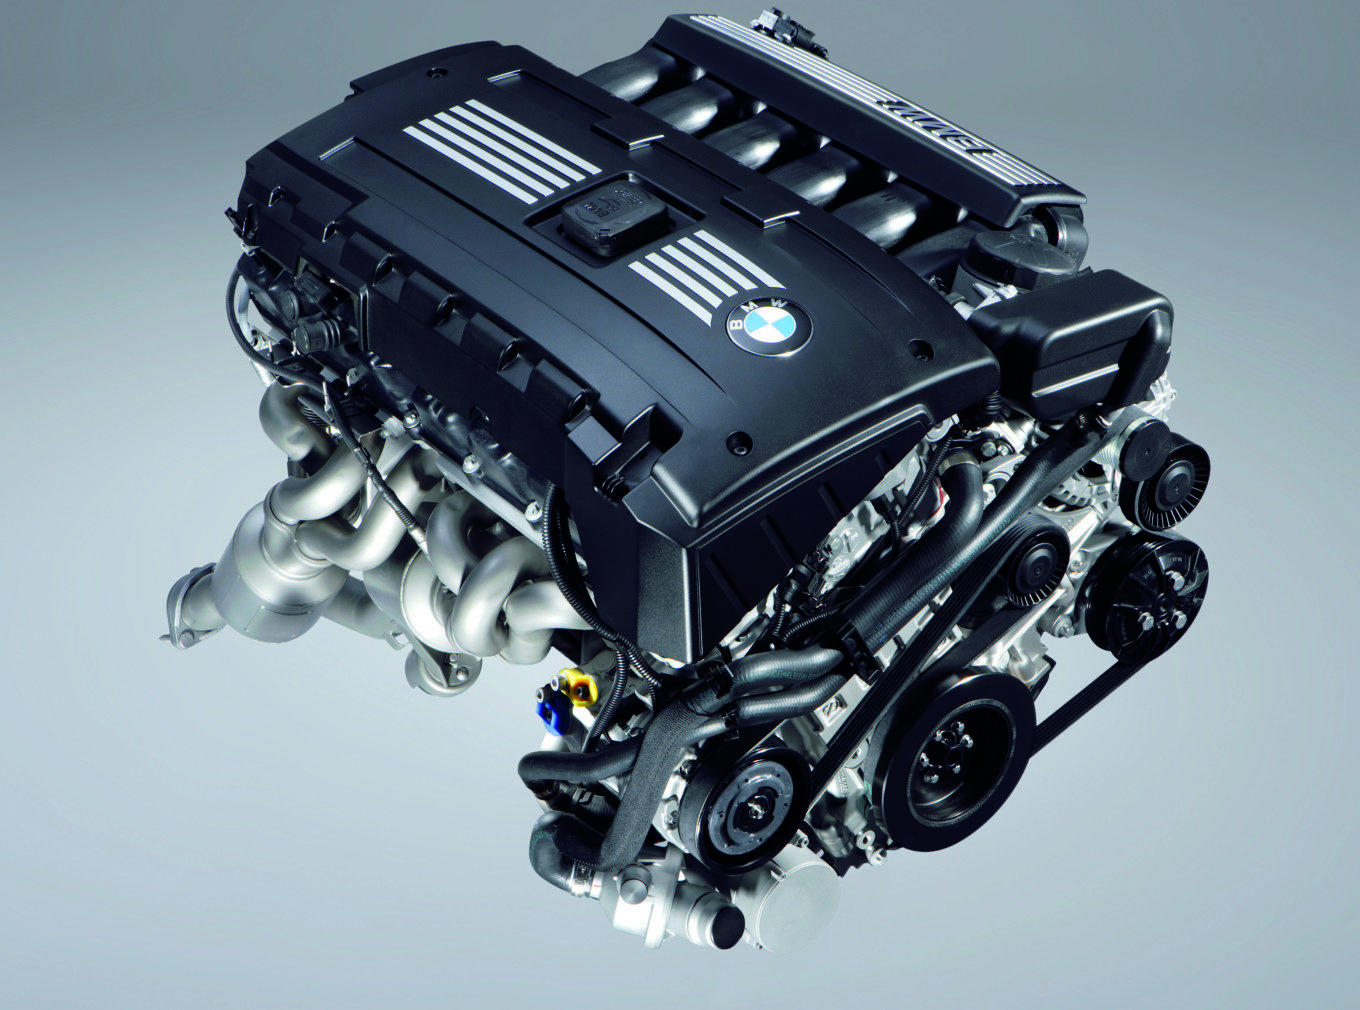 9 48 х 5. Двигатель BMW n53b30. BMW С мотором n53. N54 мотор БМВ. Двигатель n52 BMW 2.5.